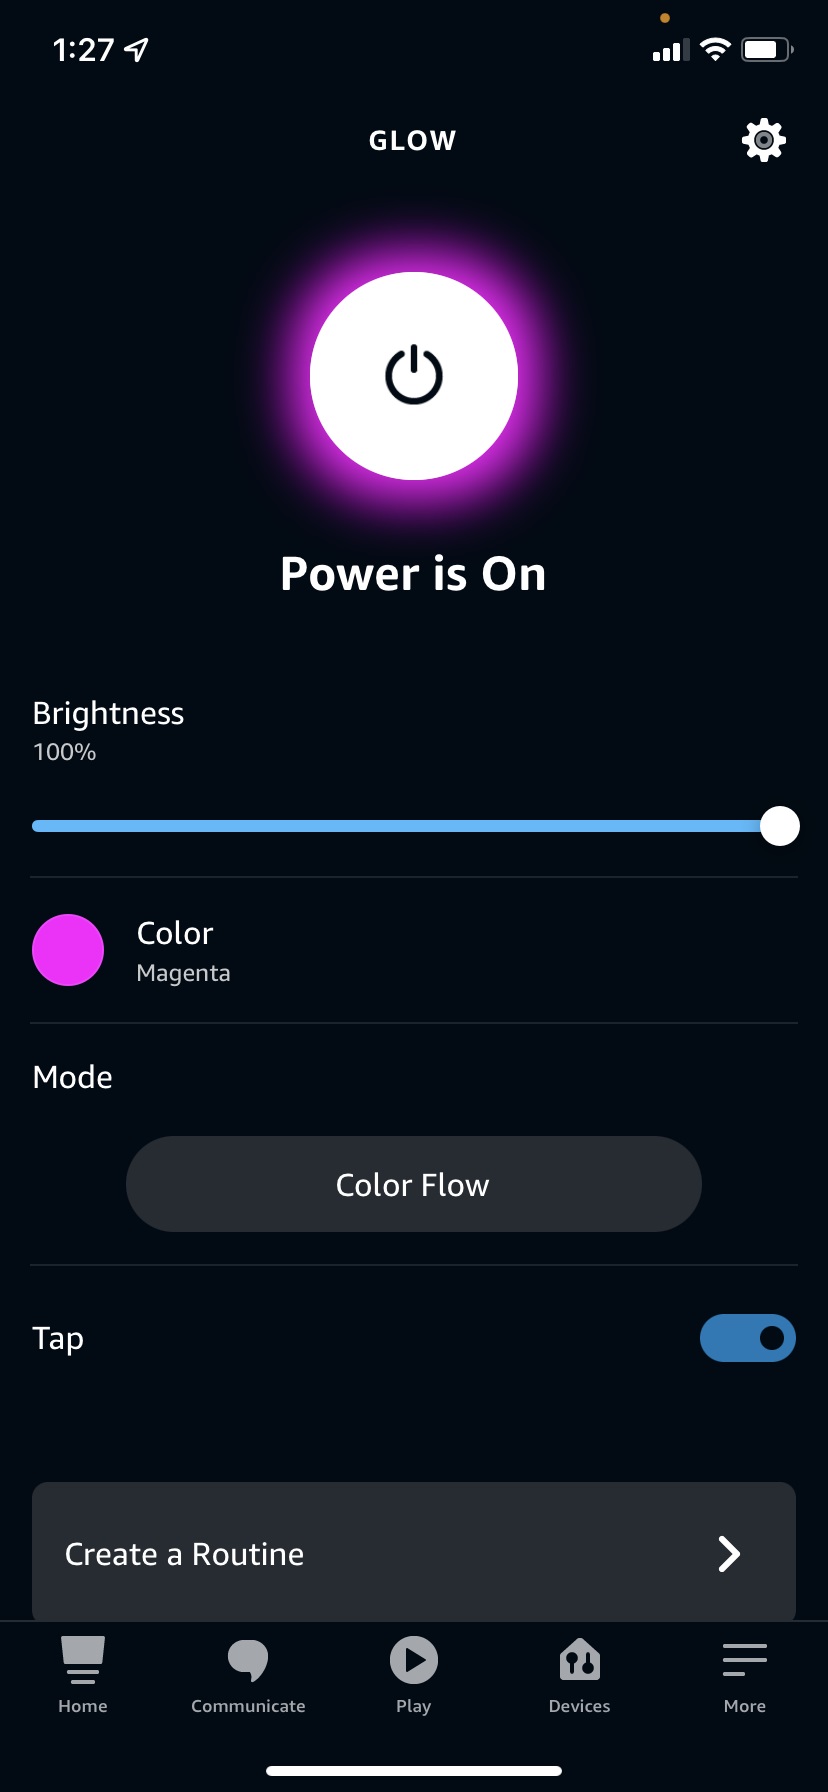 Controlling the Echo Glow via the Alexa app.